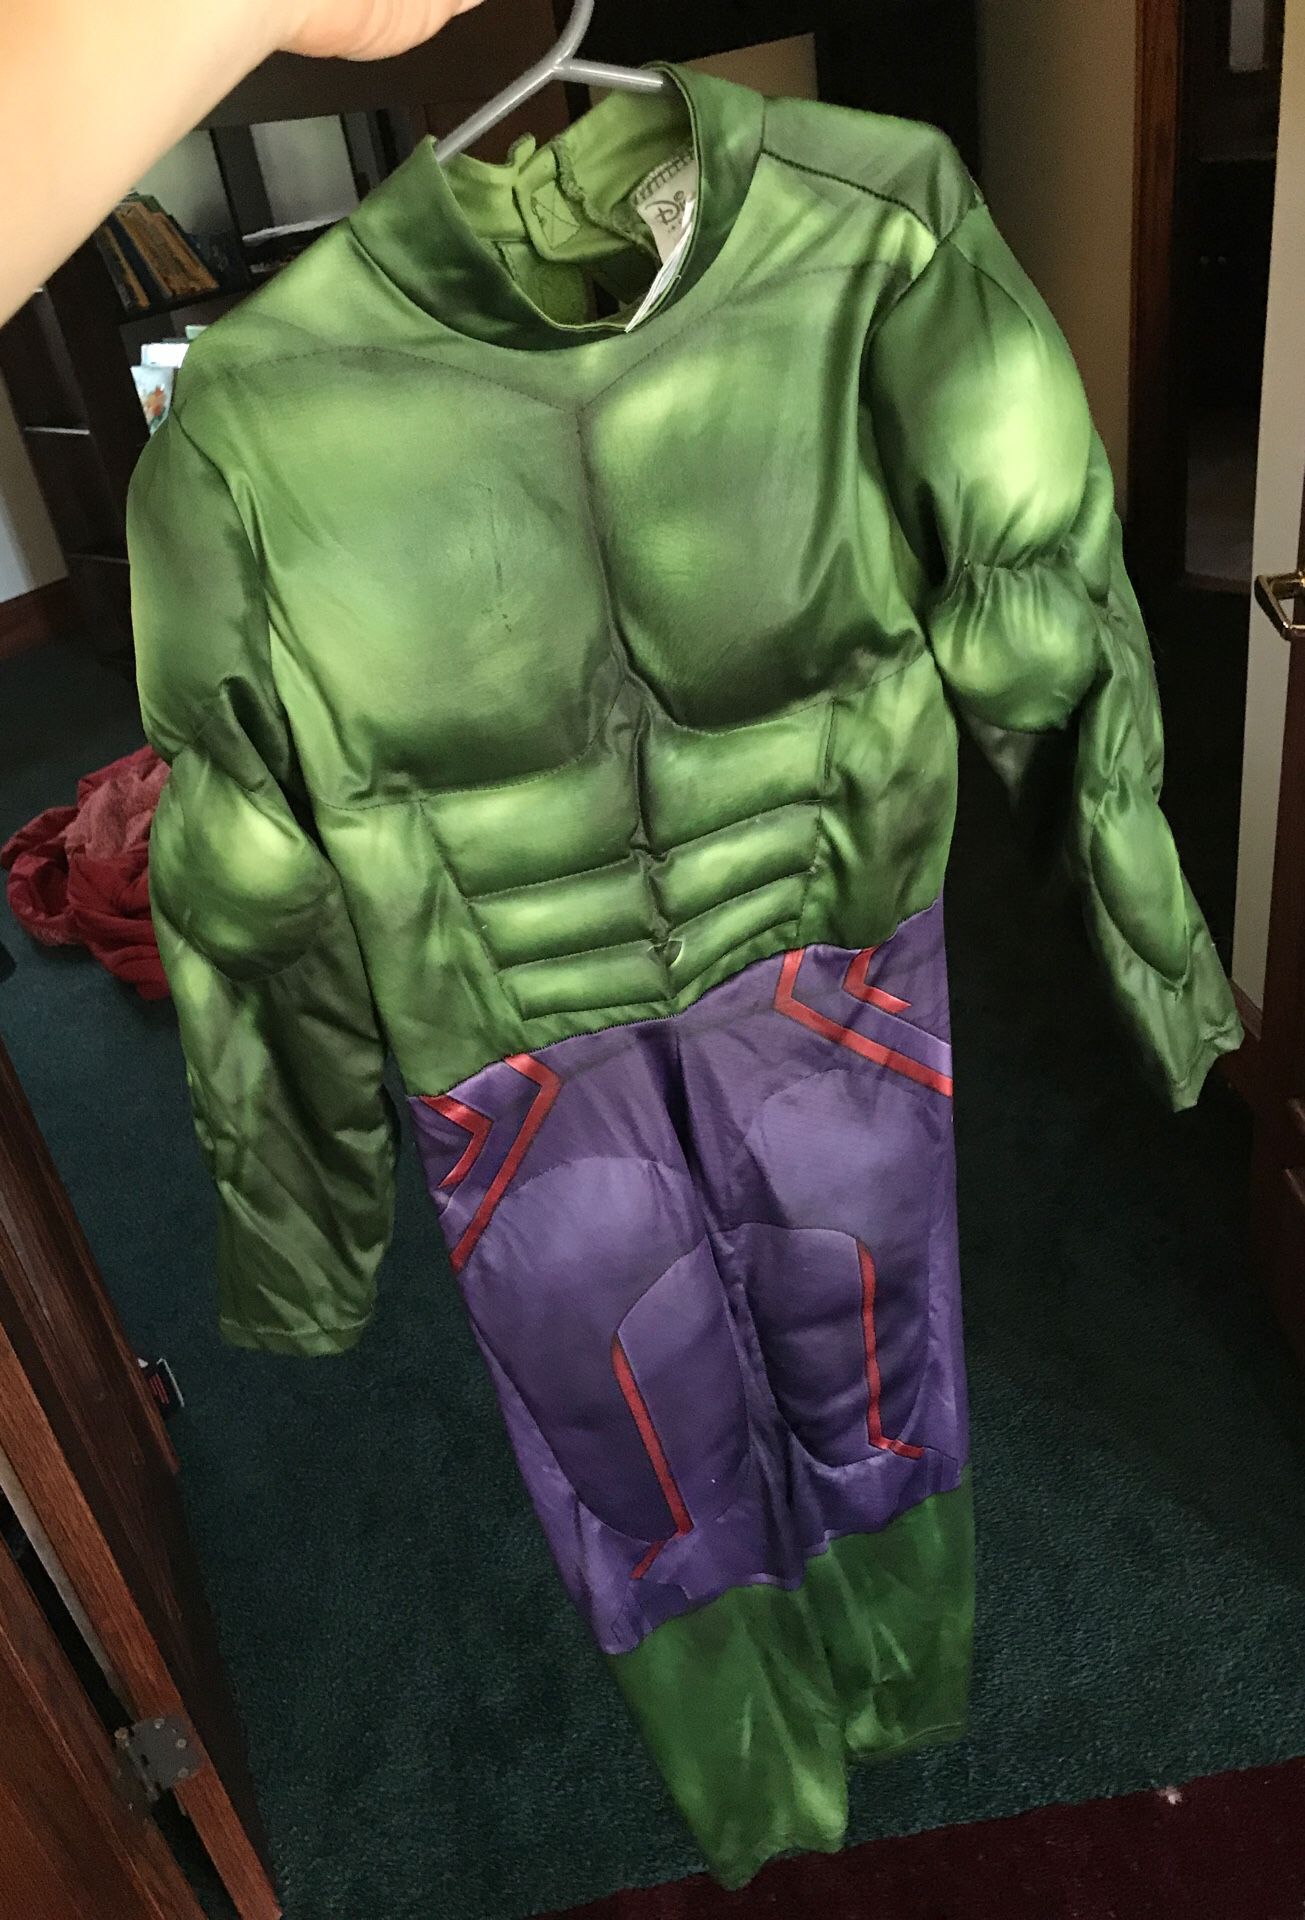 Hulk costume